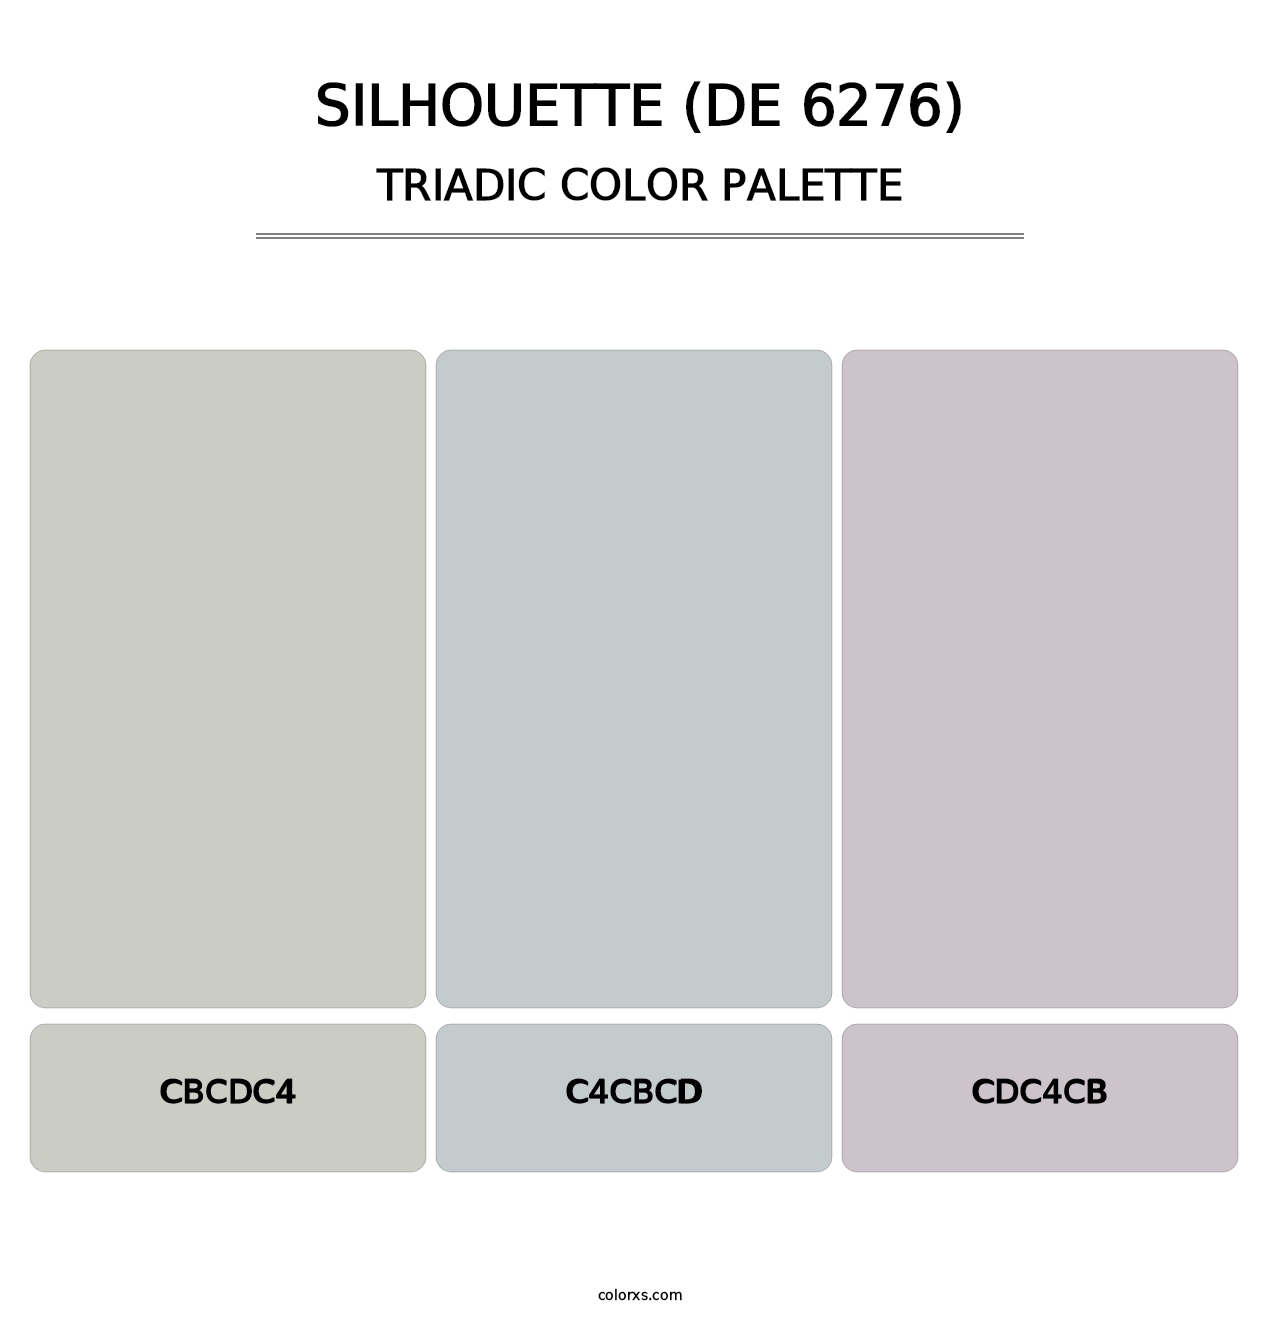 Silhouette (DE 6276) - Triadic Color Palette